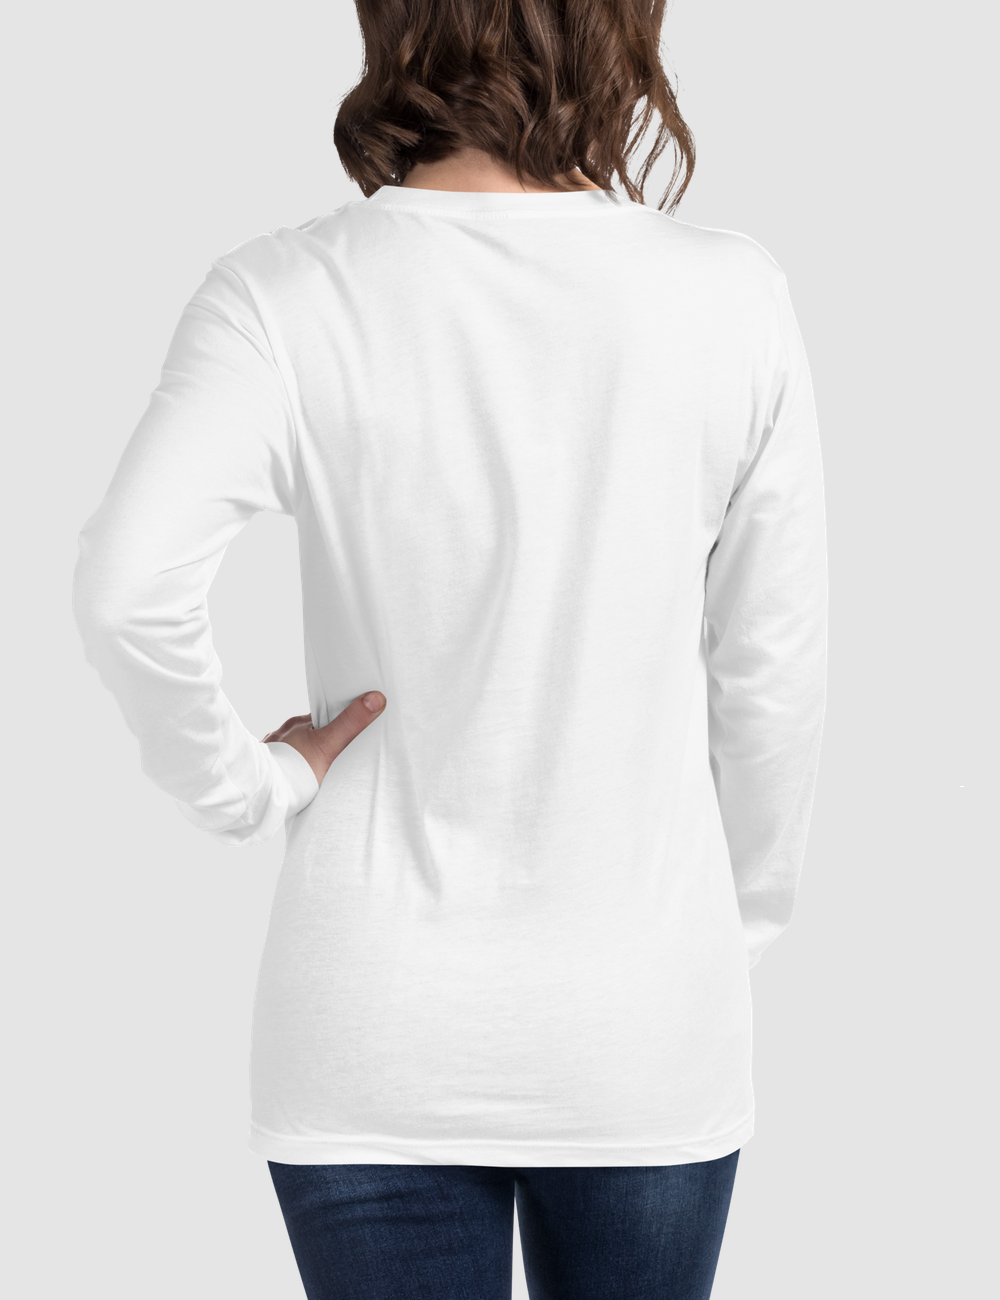 Wake Slay Repeat | Women's Long Sleeve Shirt OniTakai